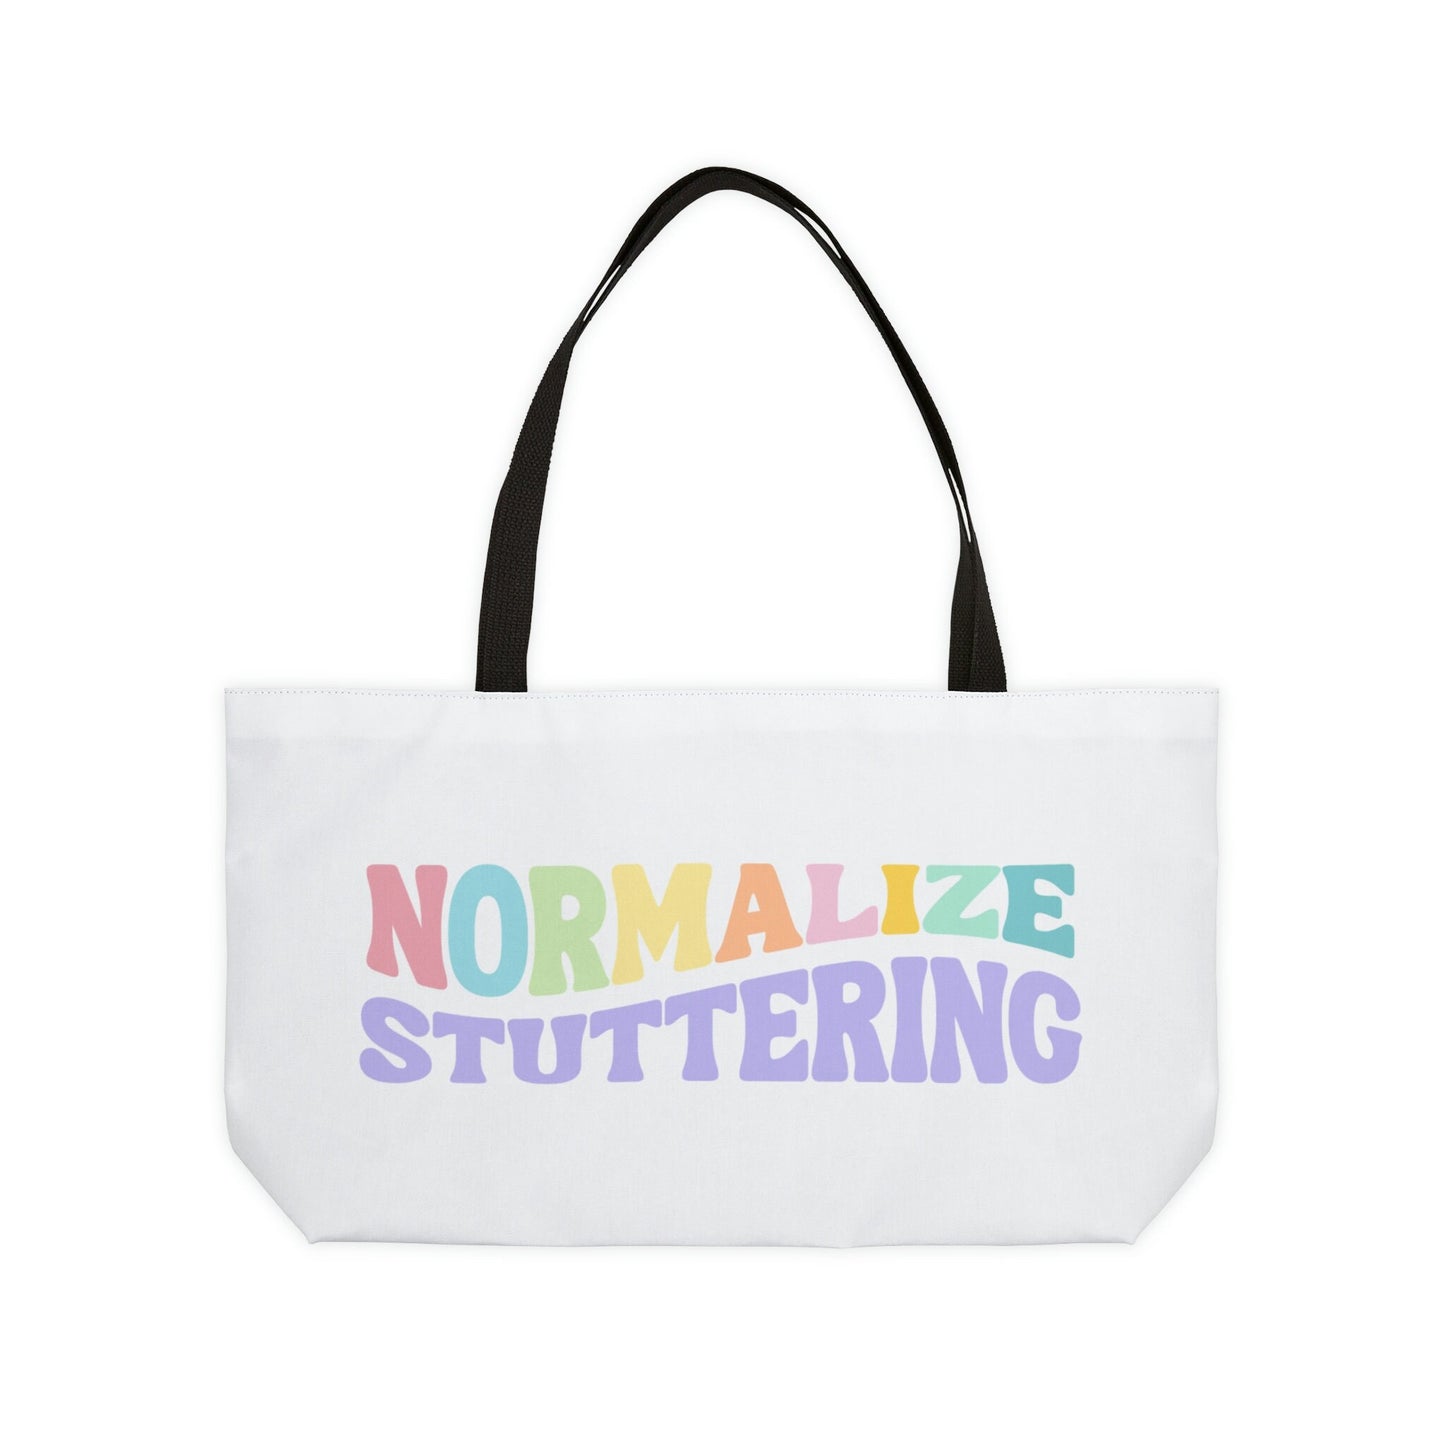 Normalize Stuttering Pastel Weekender Tote Bag